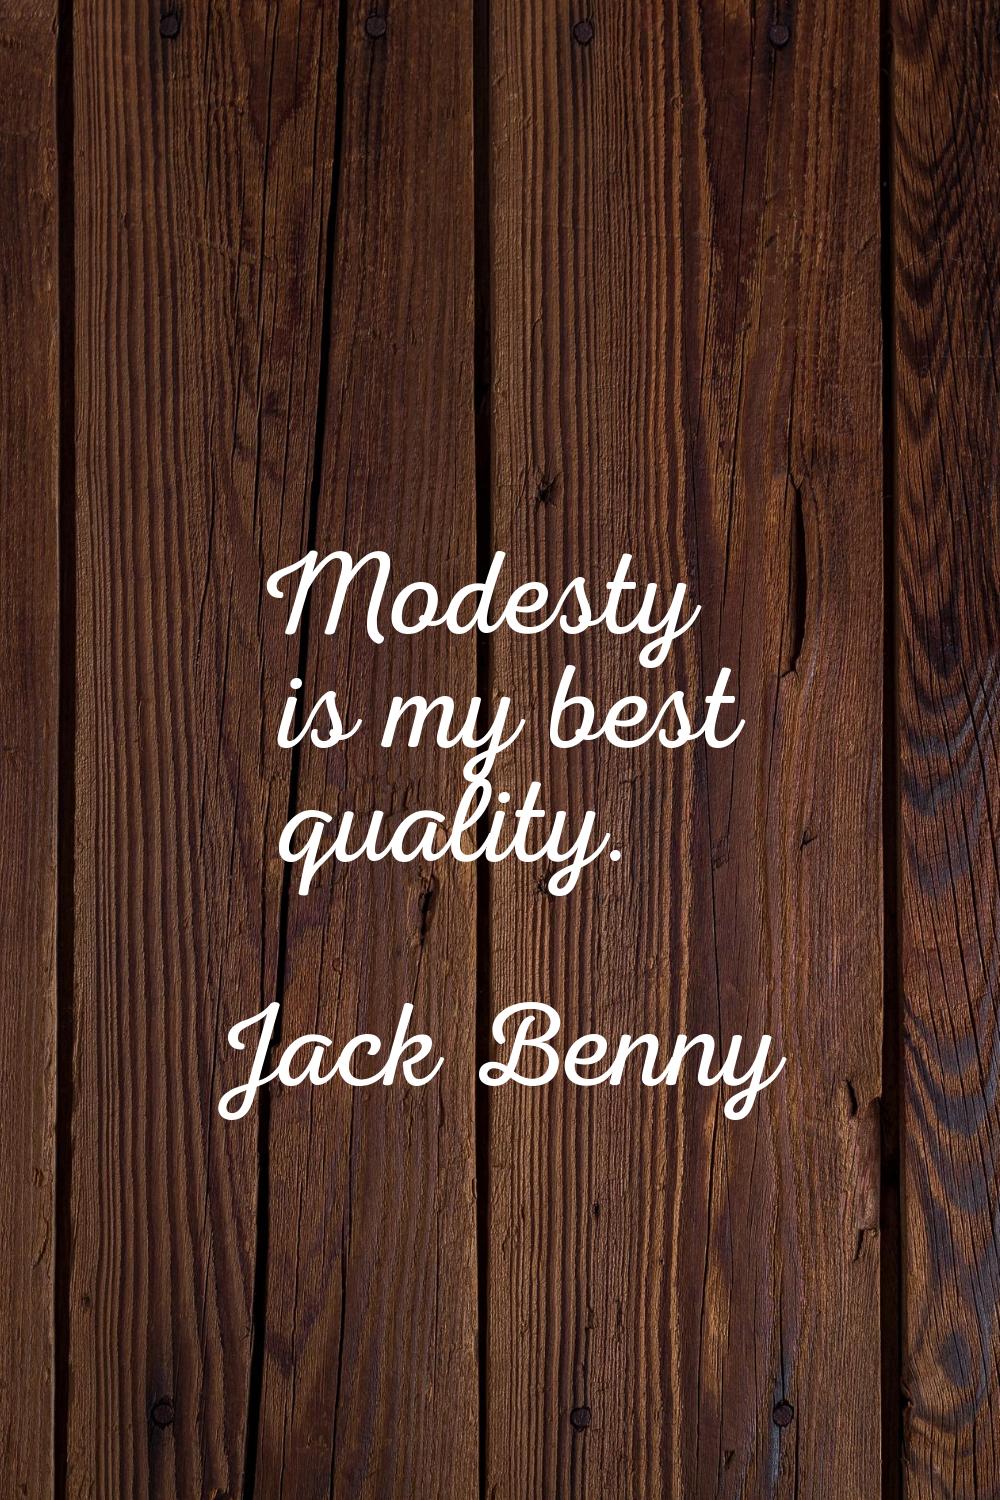 Modesty is my best quality.